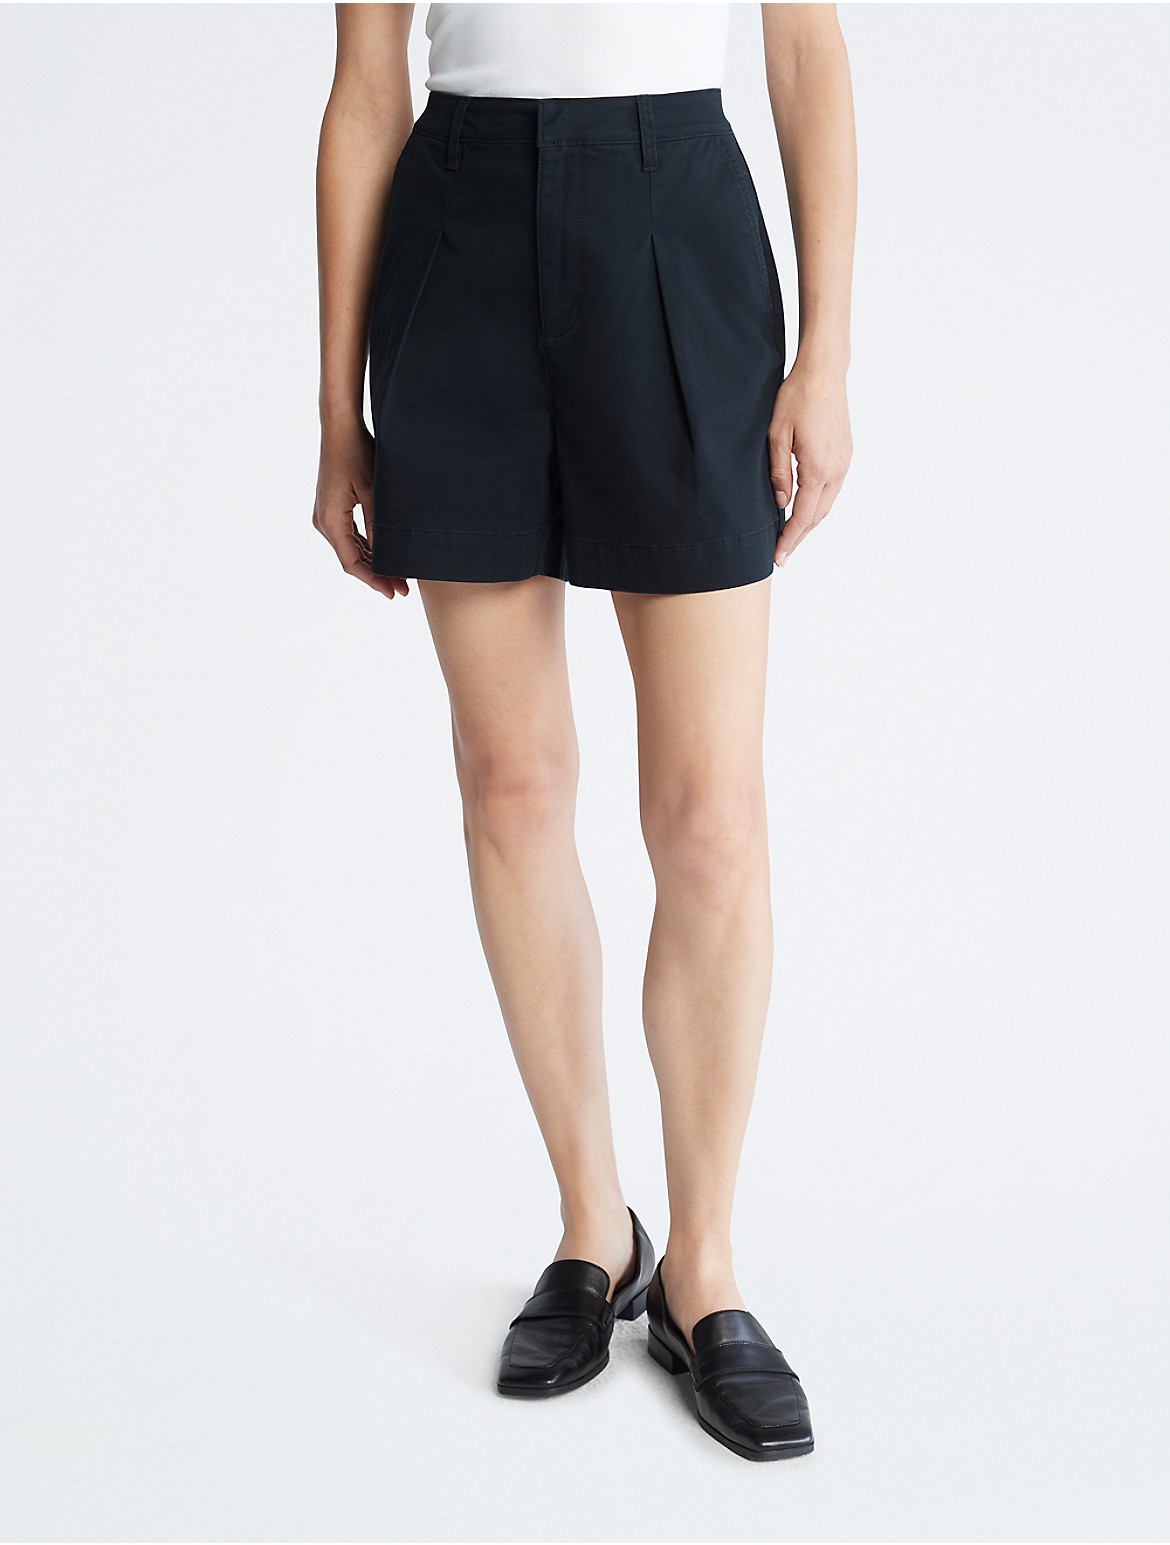 Calvin Klein Women's Twill Pleated 5-Inch Shorts - Black - 32